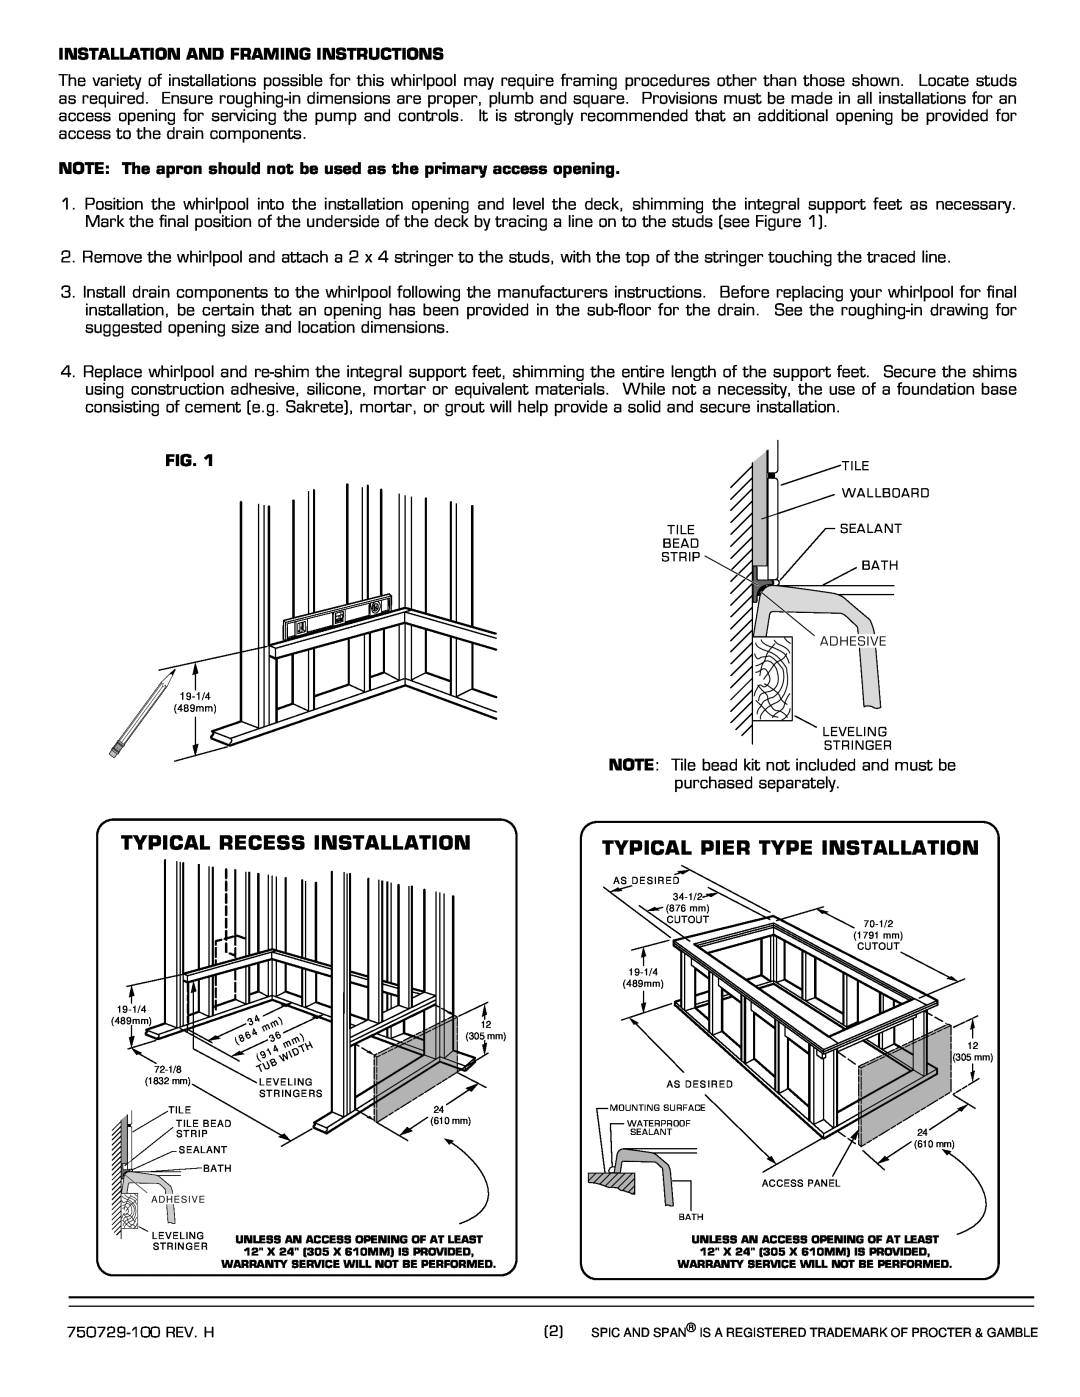 American Standard 7236.XXXW installation instructions Typical Recess Installation, Typical Pier Type Installation 